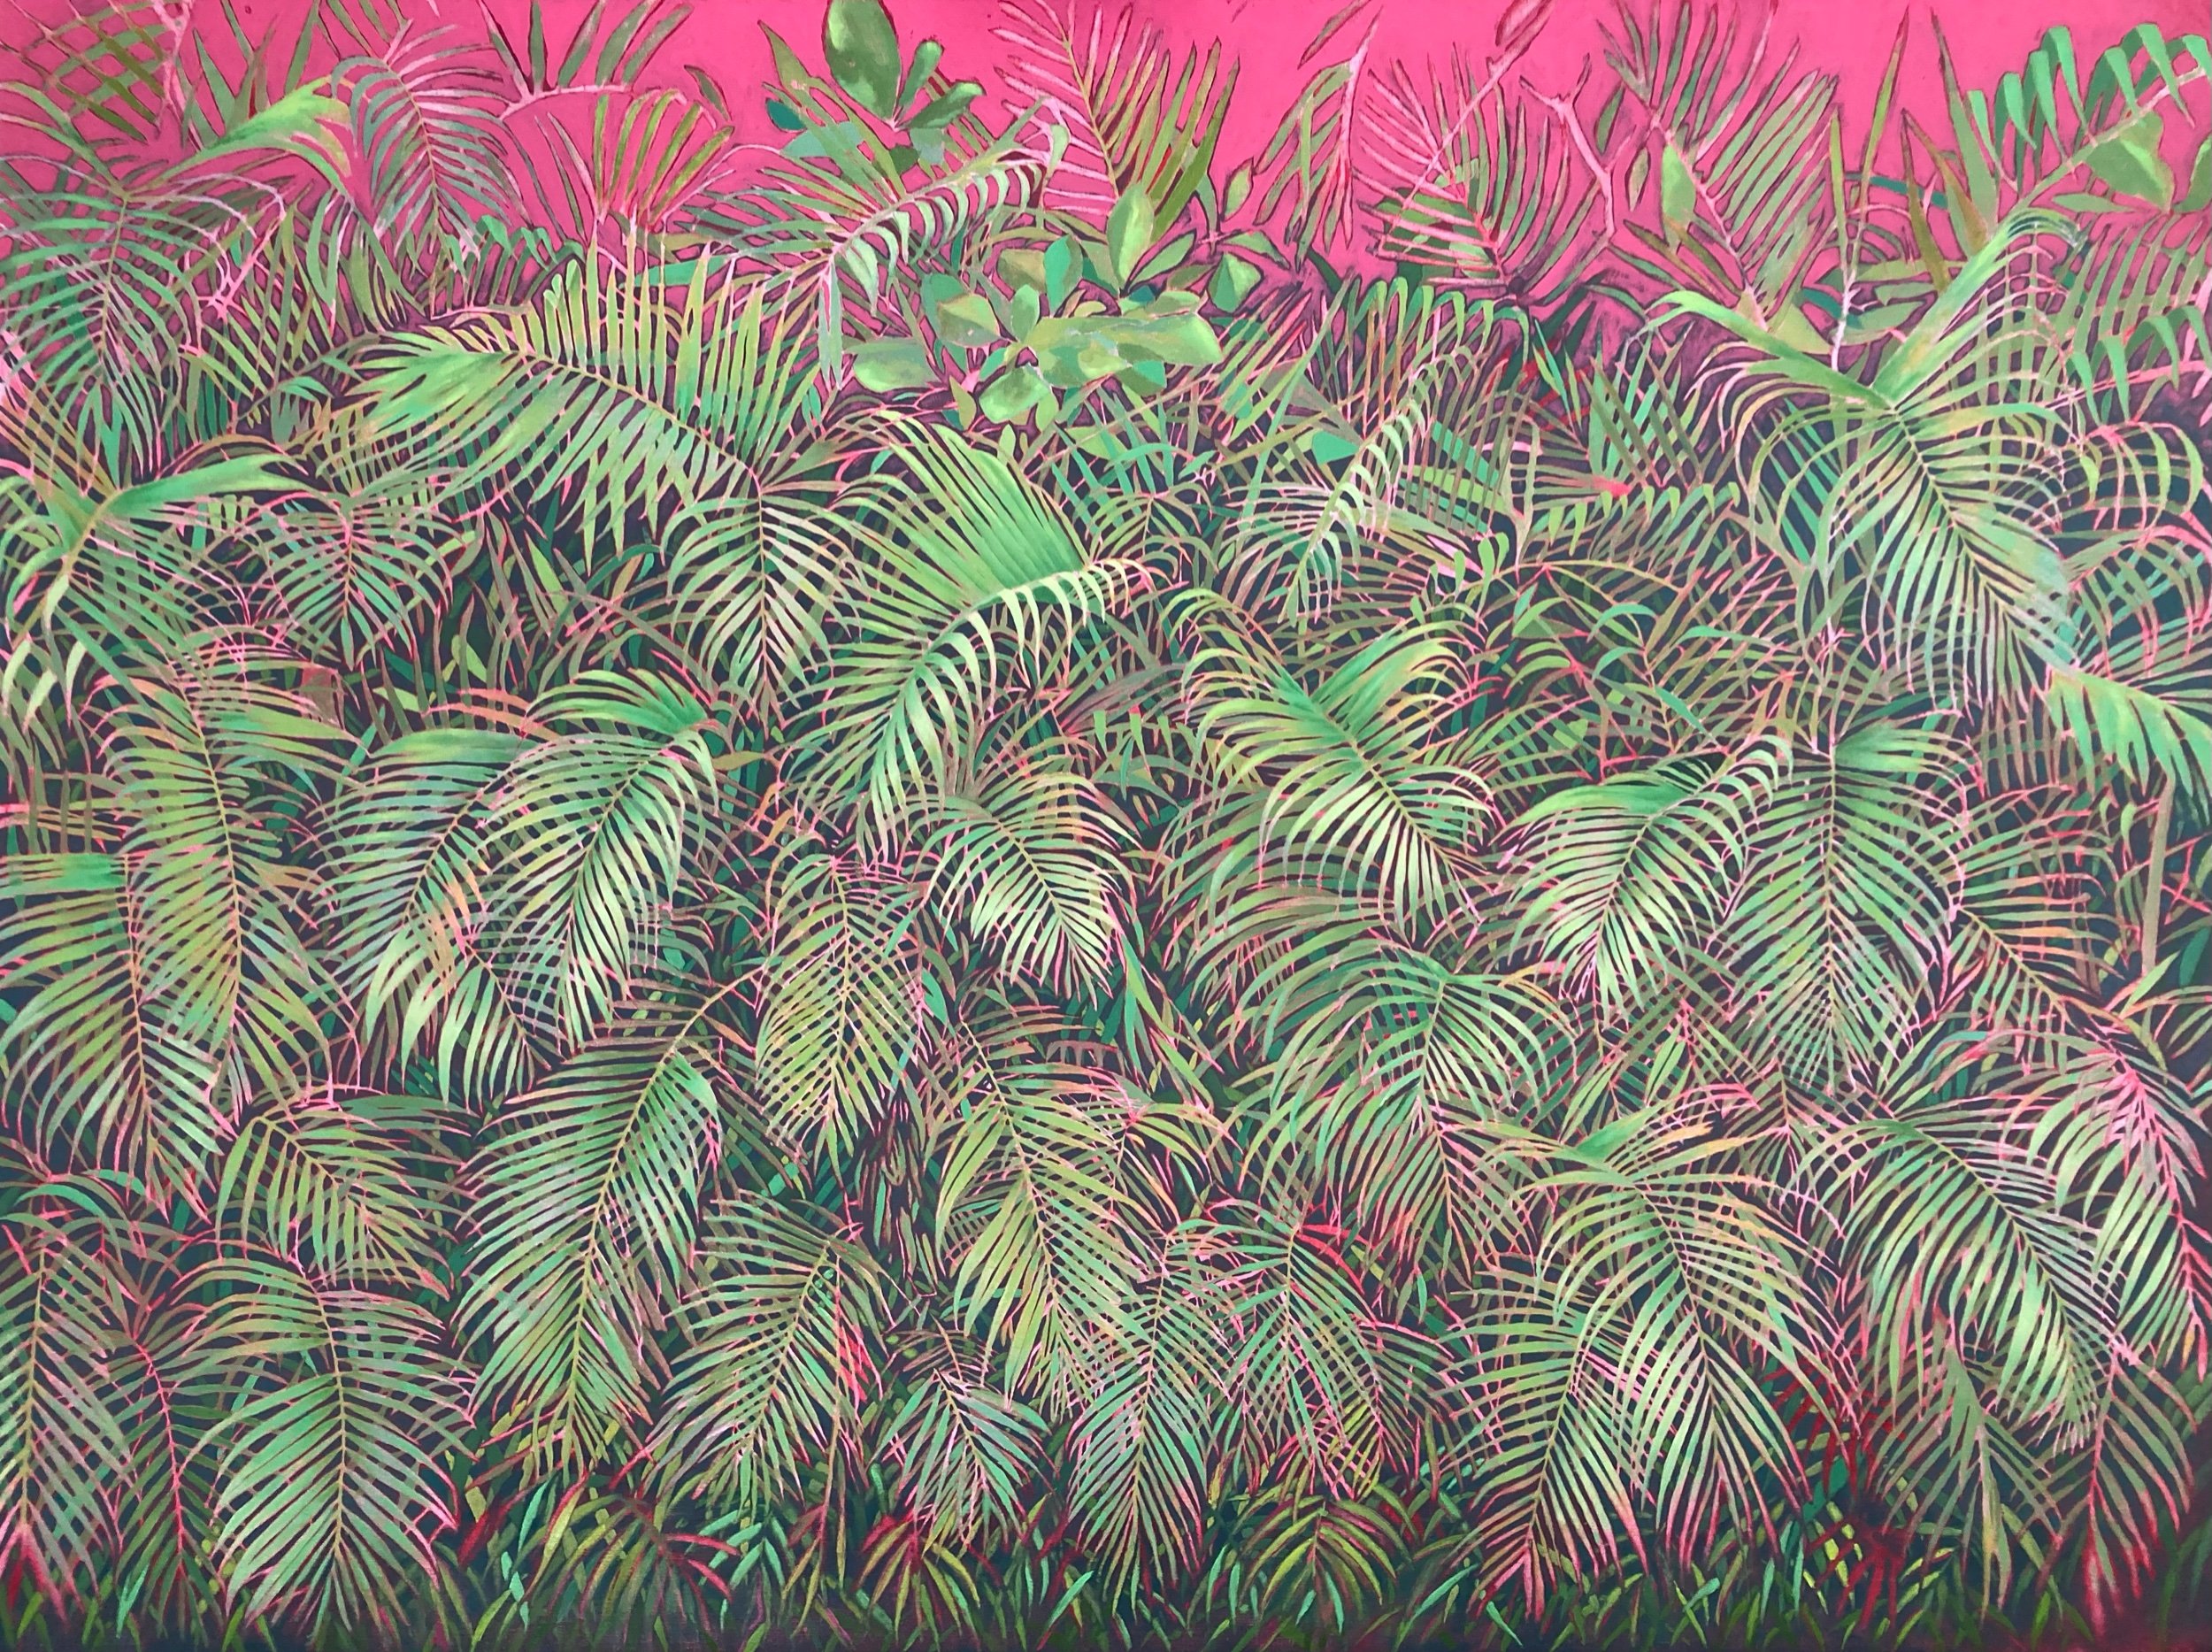 Jungle 48 x 36 in. Oil on Linen